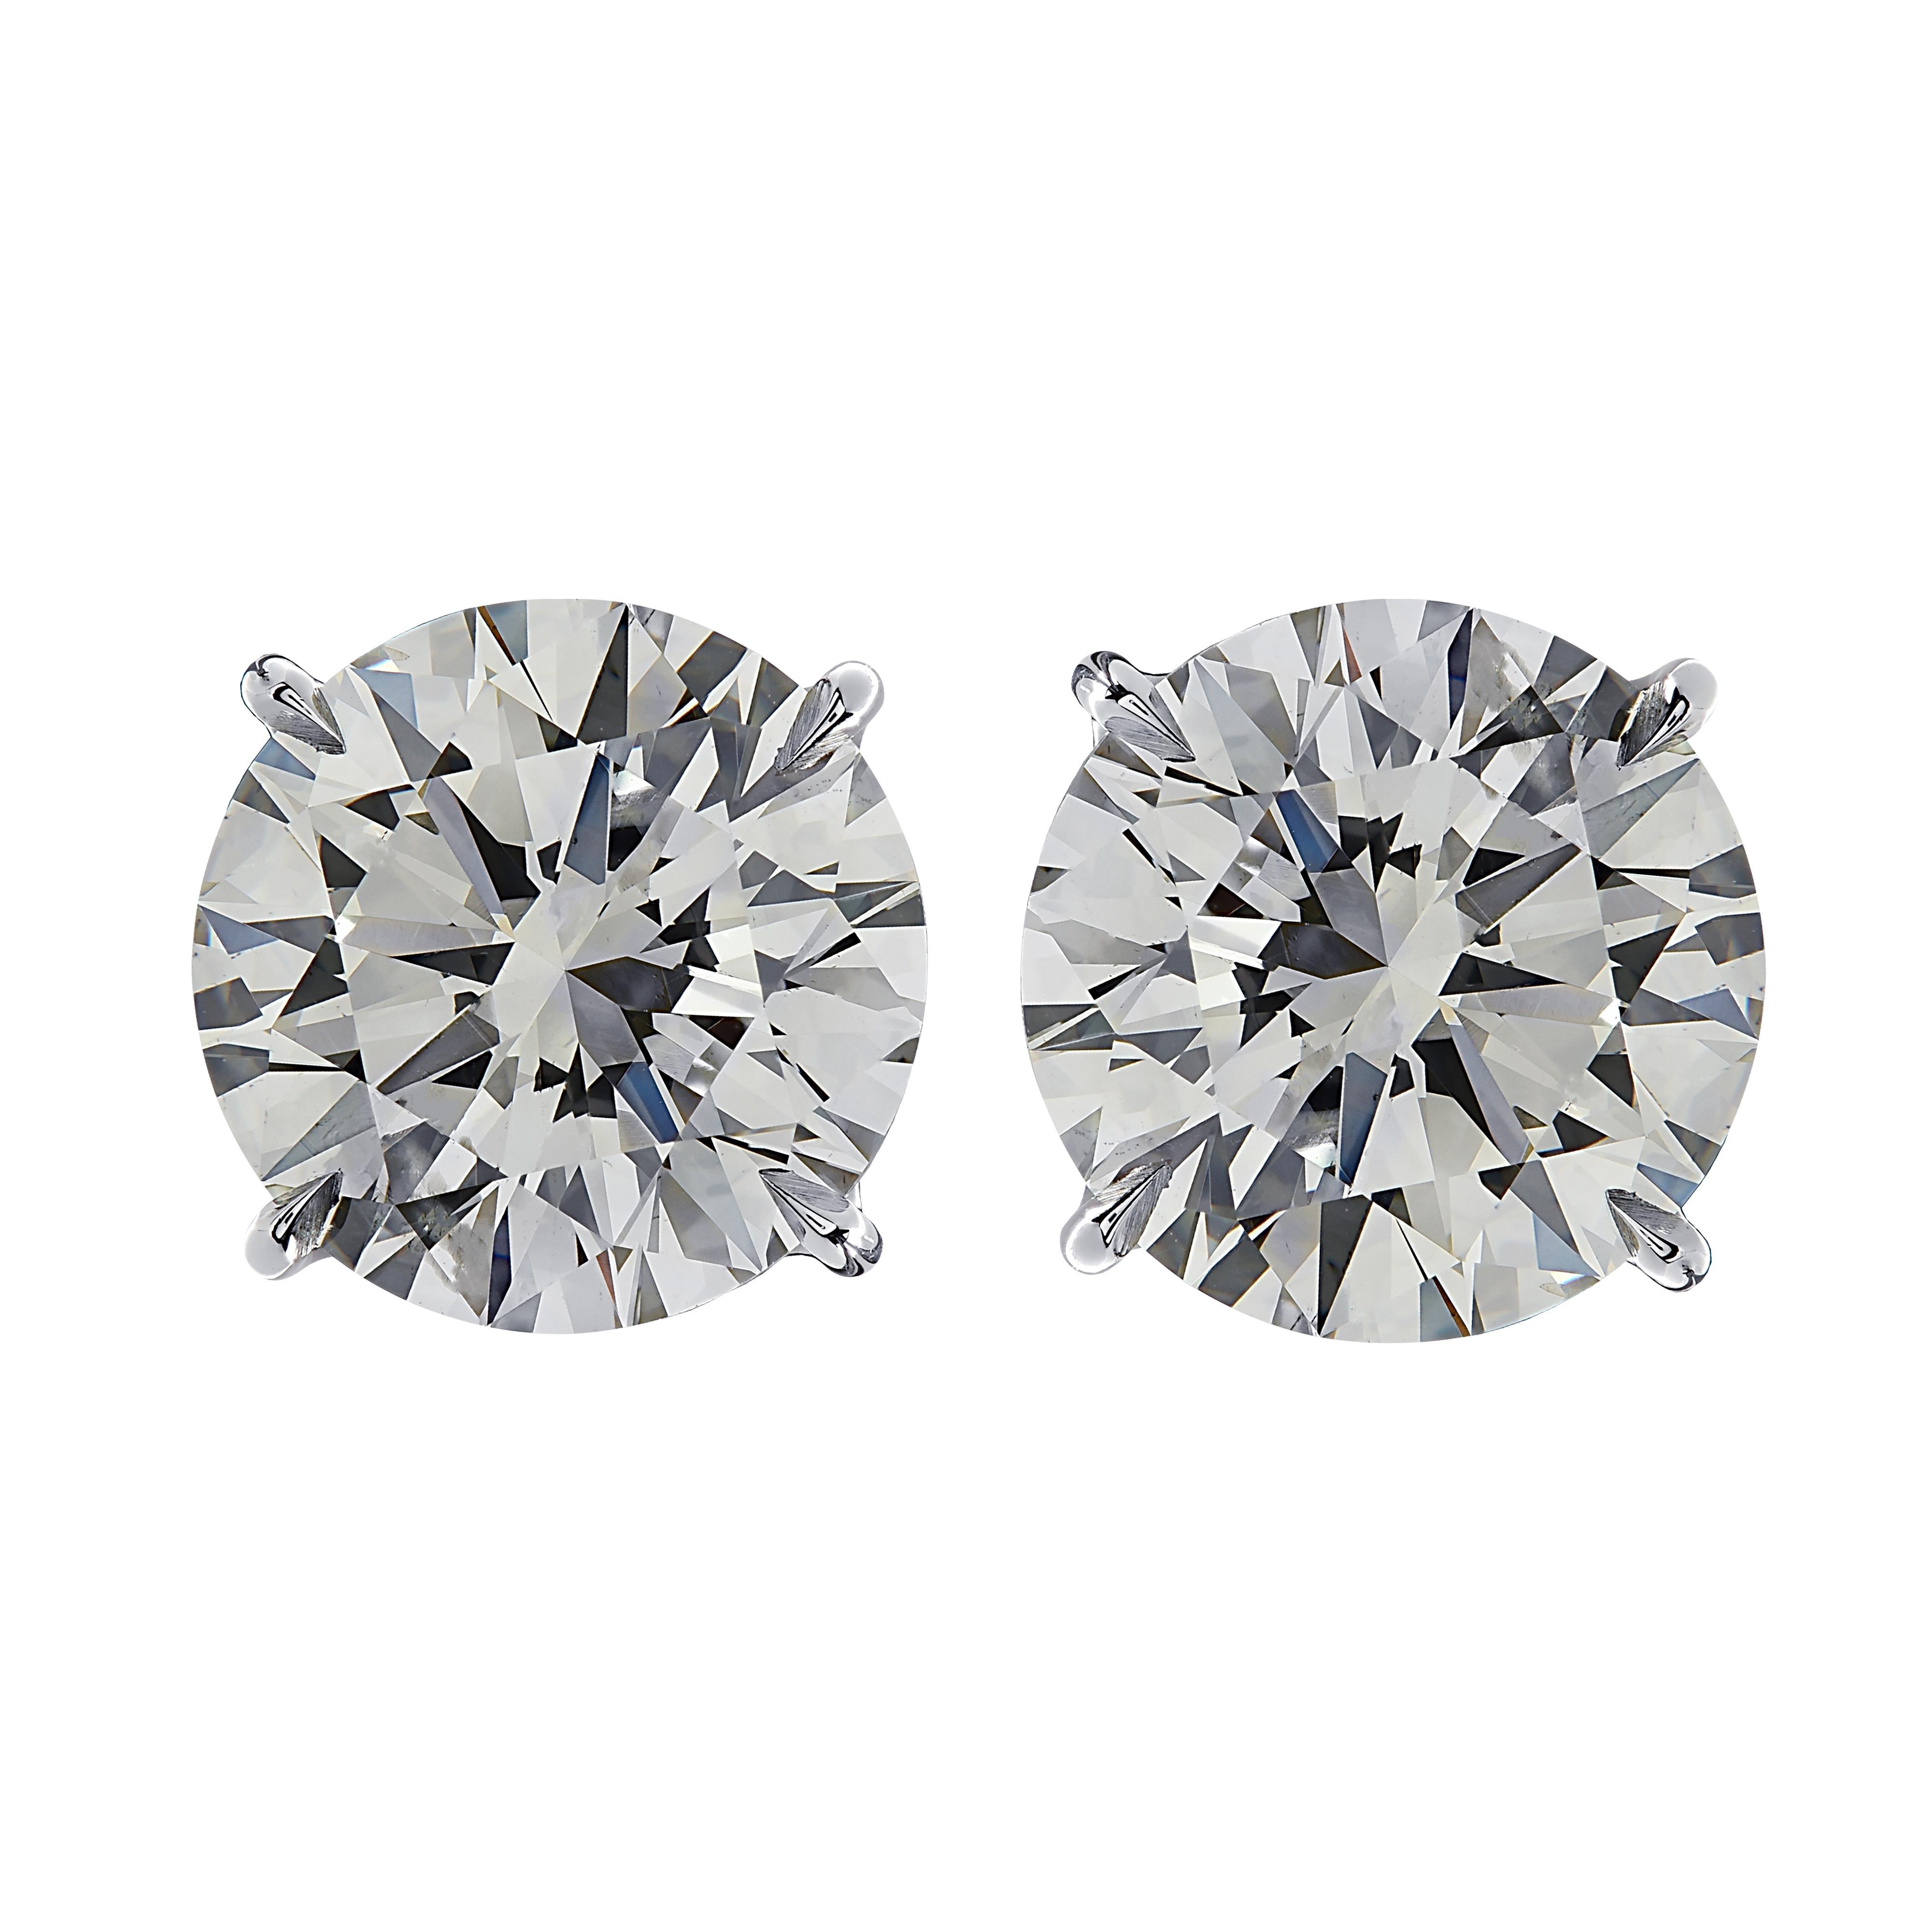 Round Cut Vivid Diamonds 8.14 Carat Diamond Stud Earrings